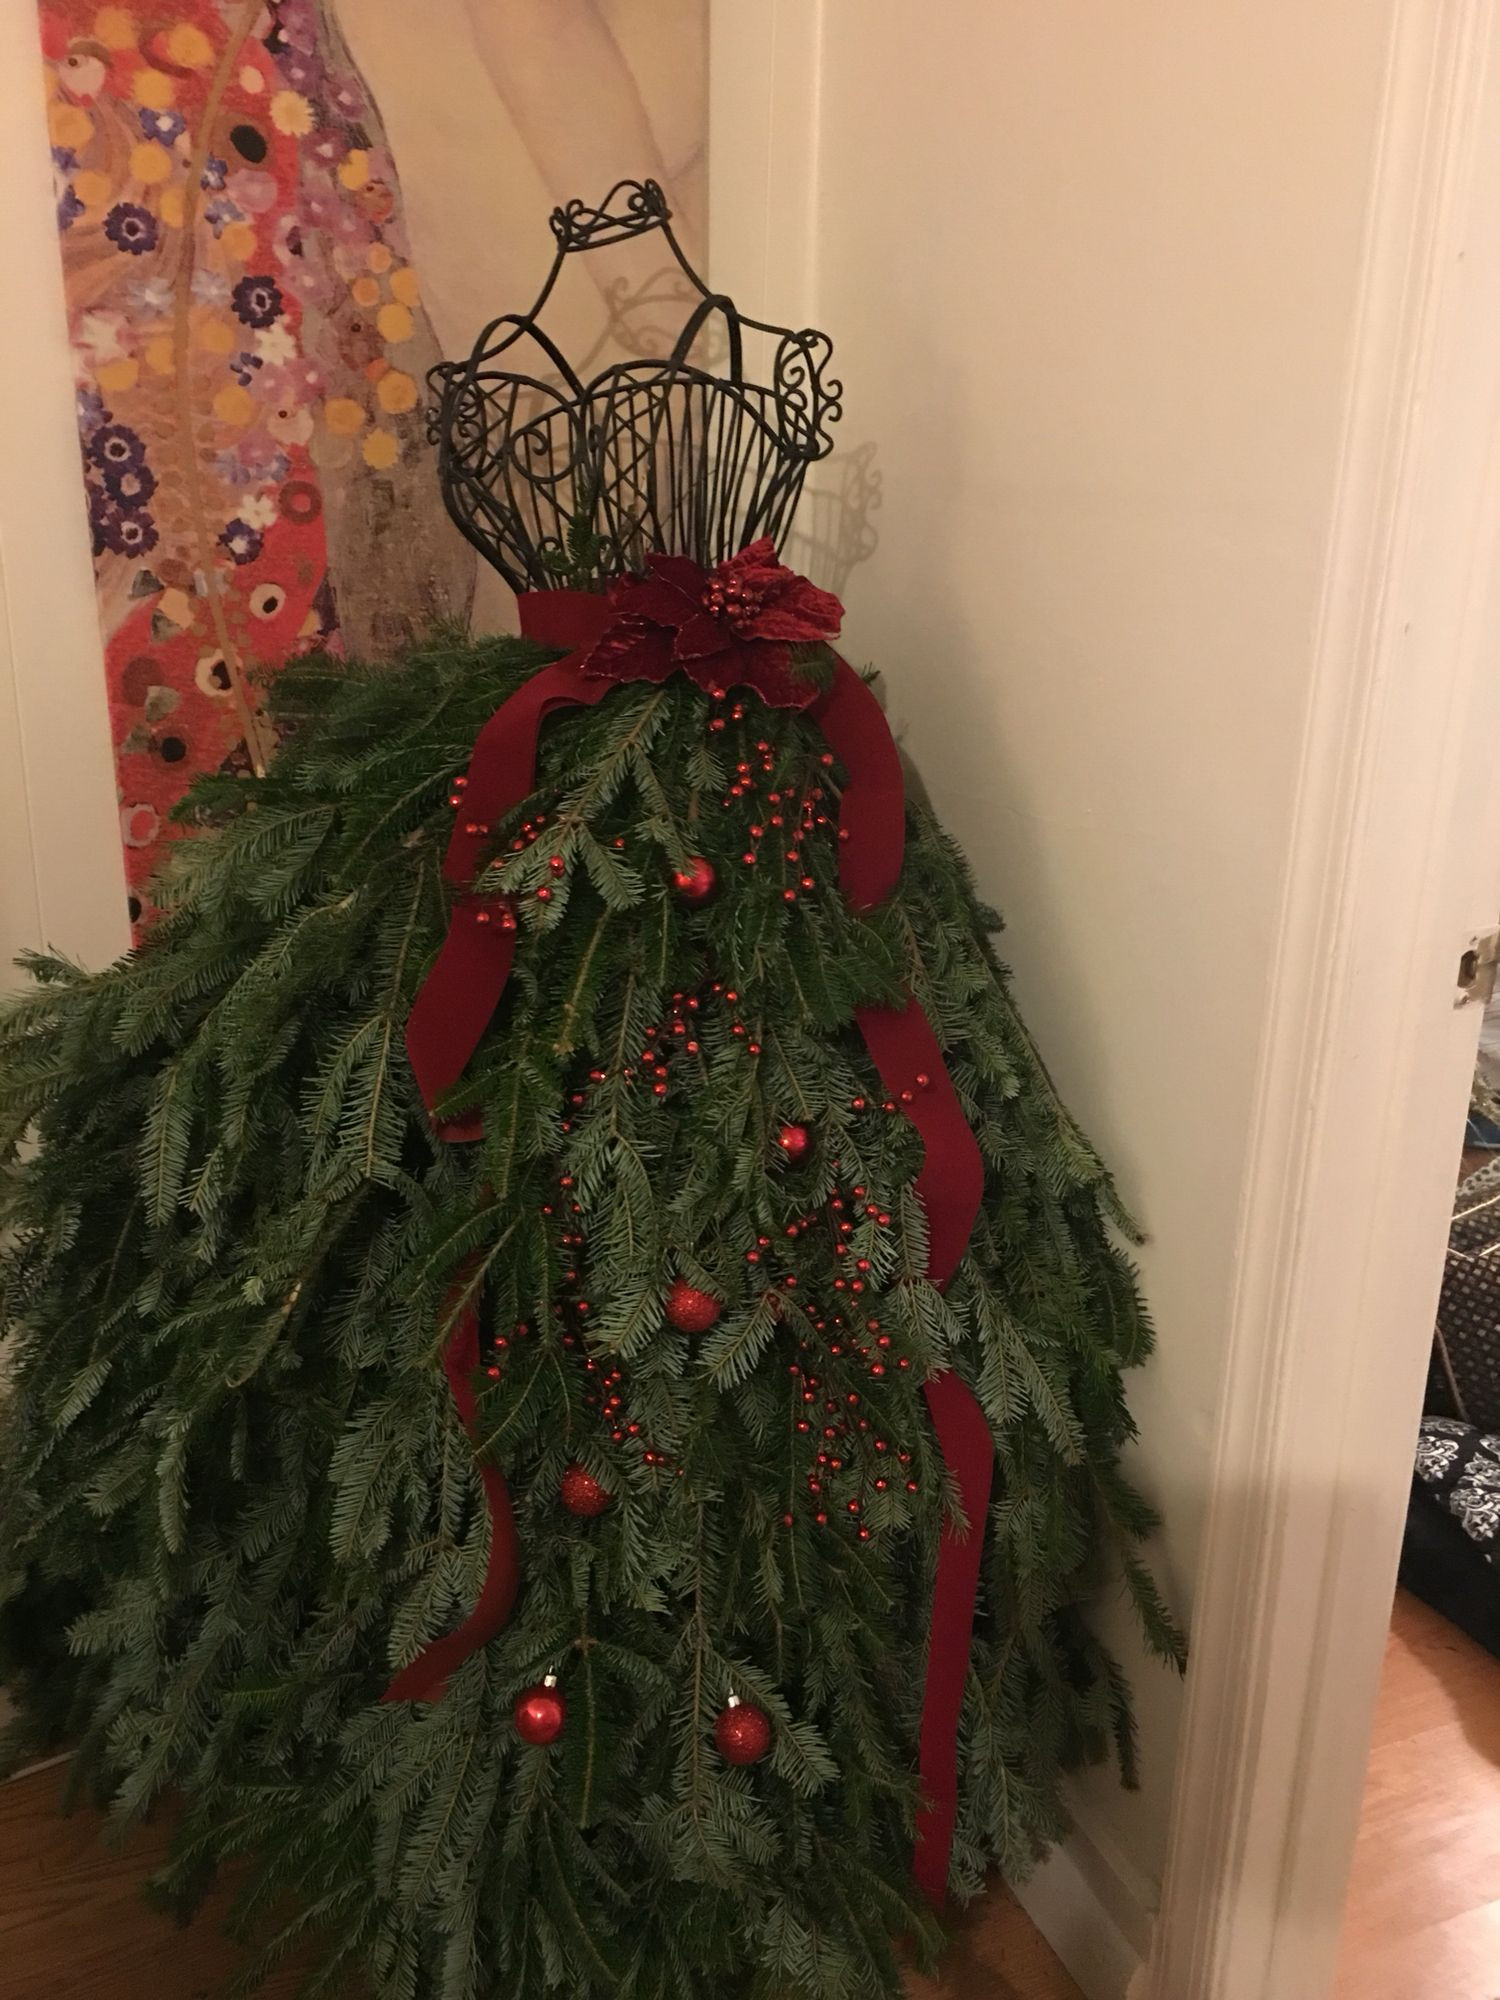 DIY Christmas Tree Dress Form
 Dress form Christmas tree